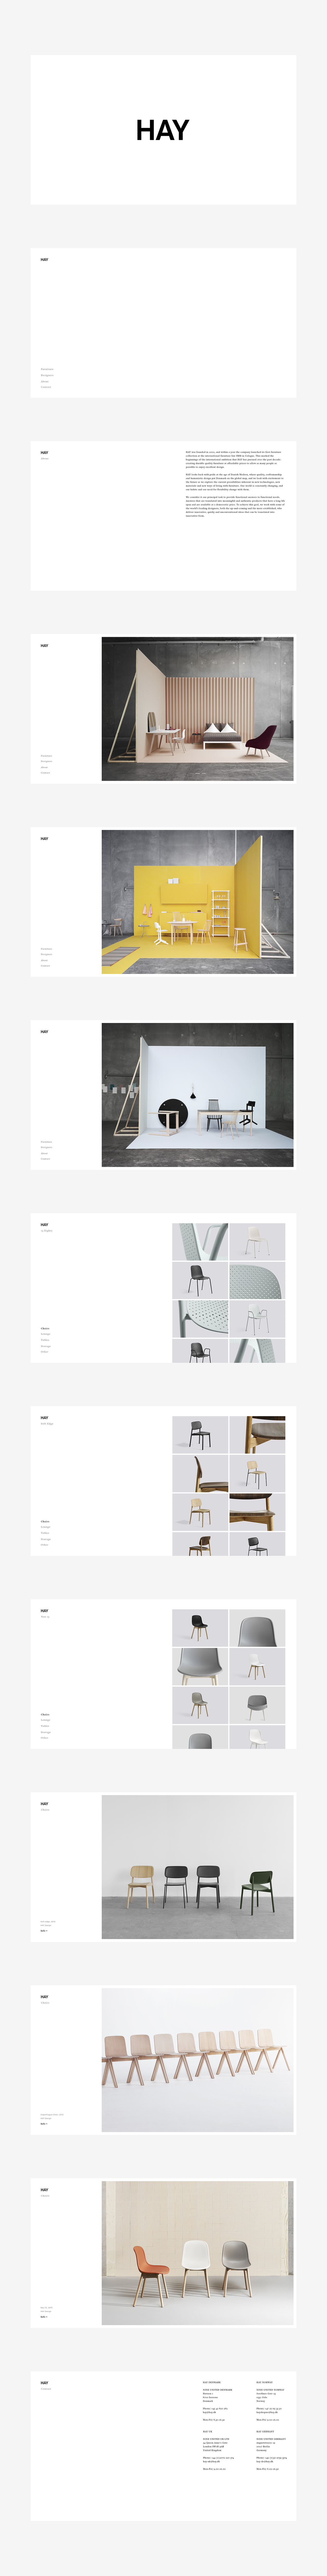 minimal hay furniture design Webdesign graphicdesign concept identity visual